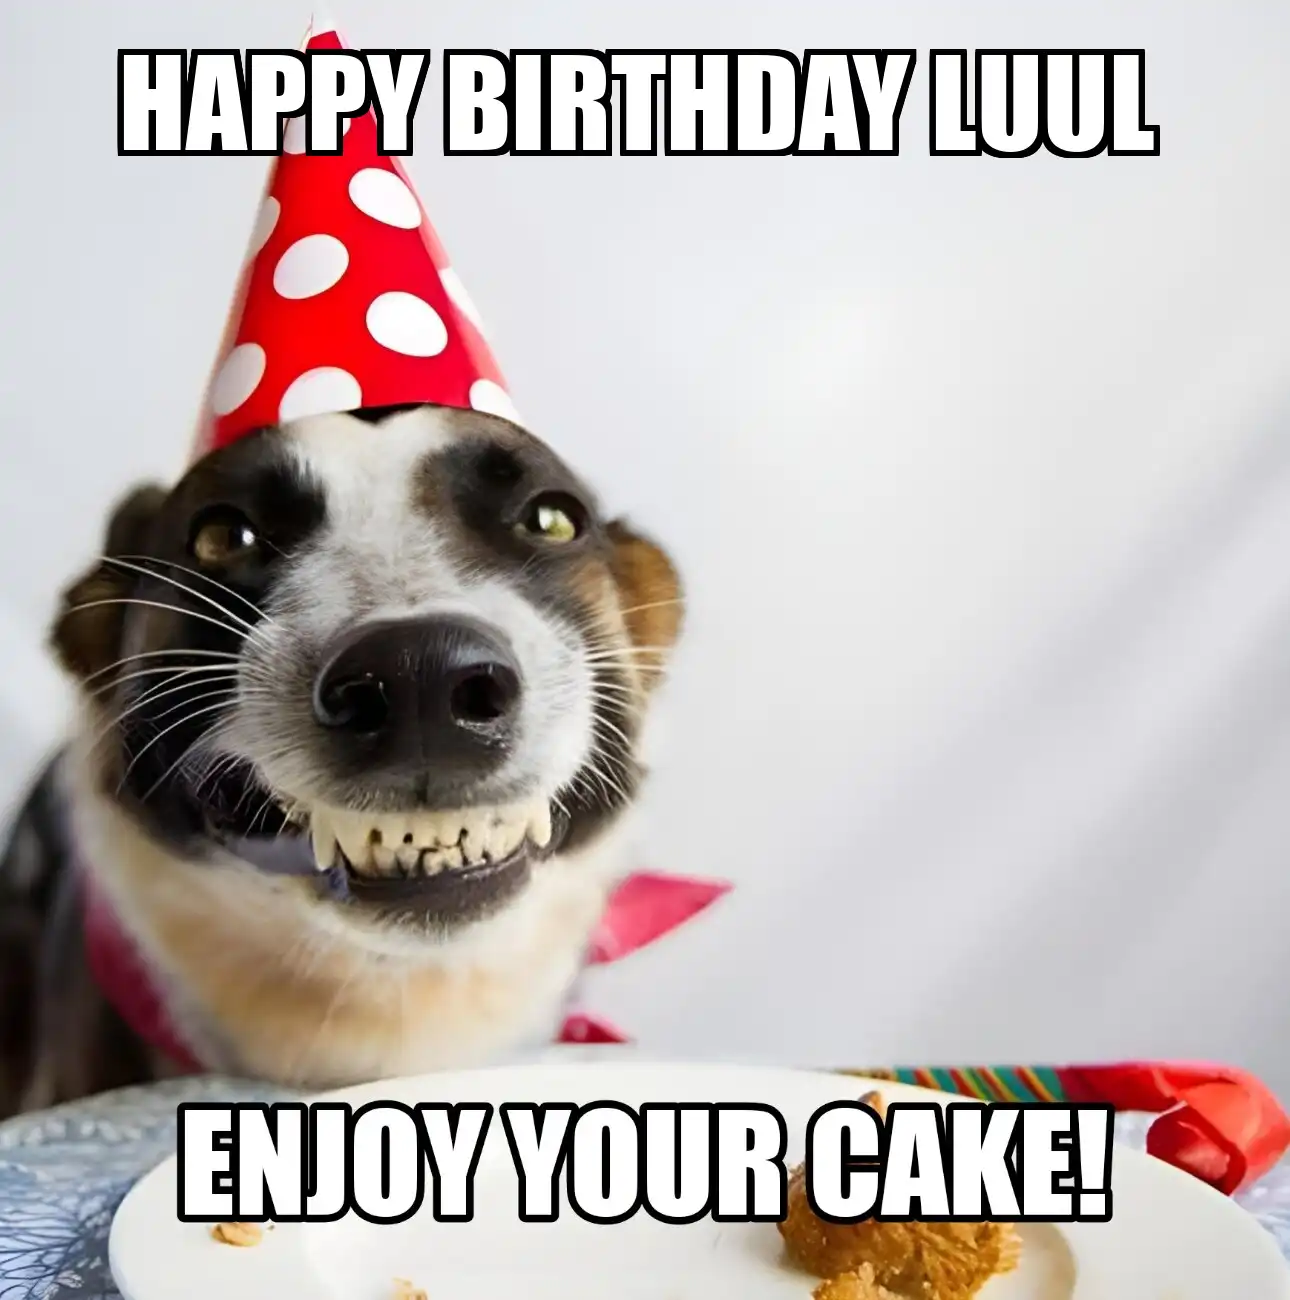 Happy Birthday Luul Enjoy Your Cake Dog Meme